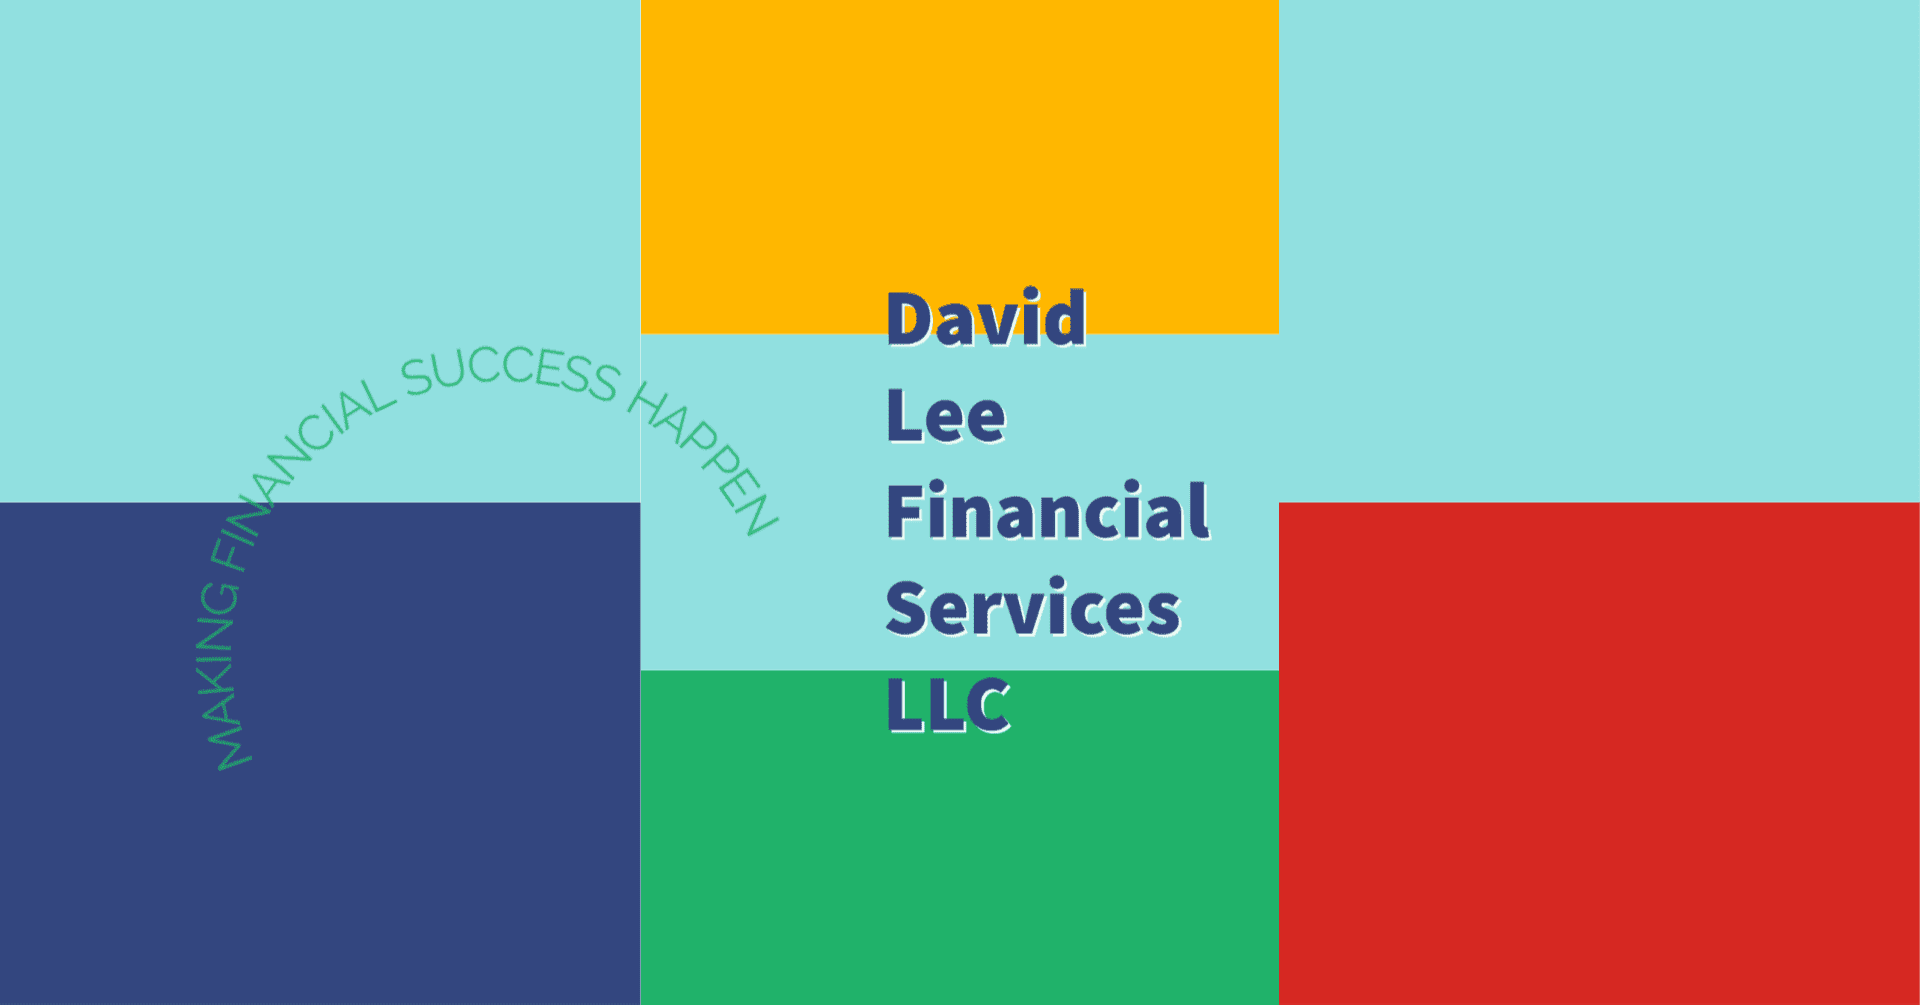 David Lee Financial Services LLC